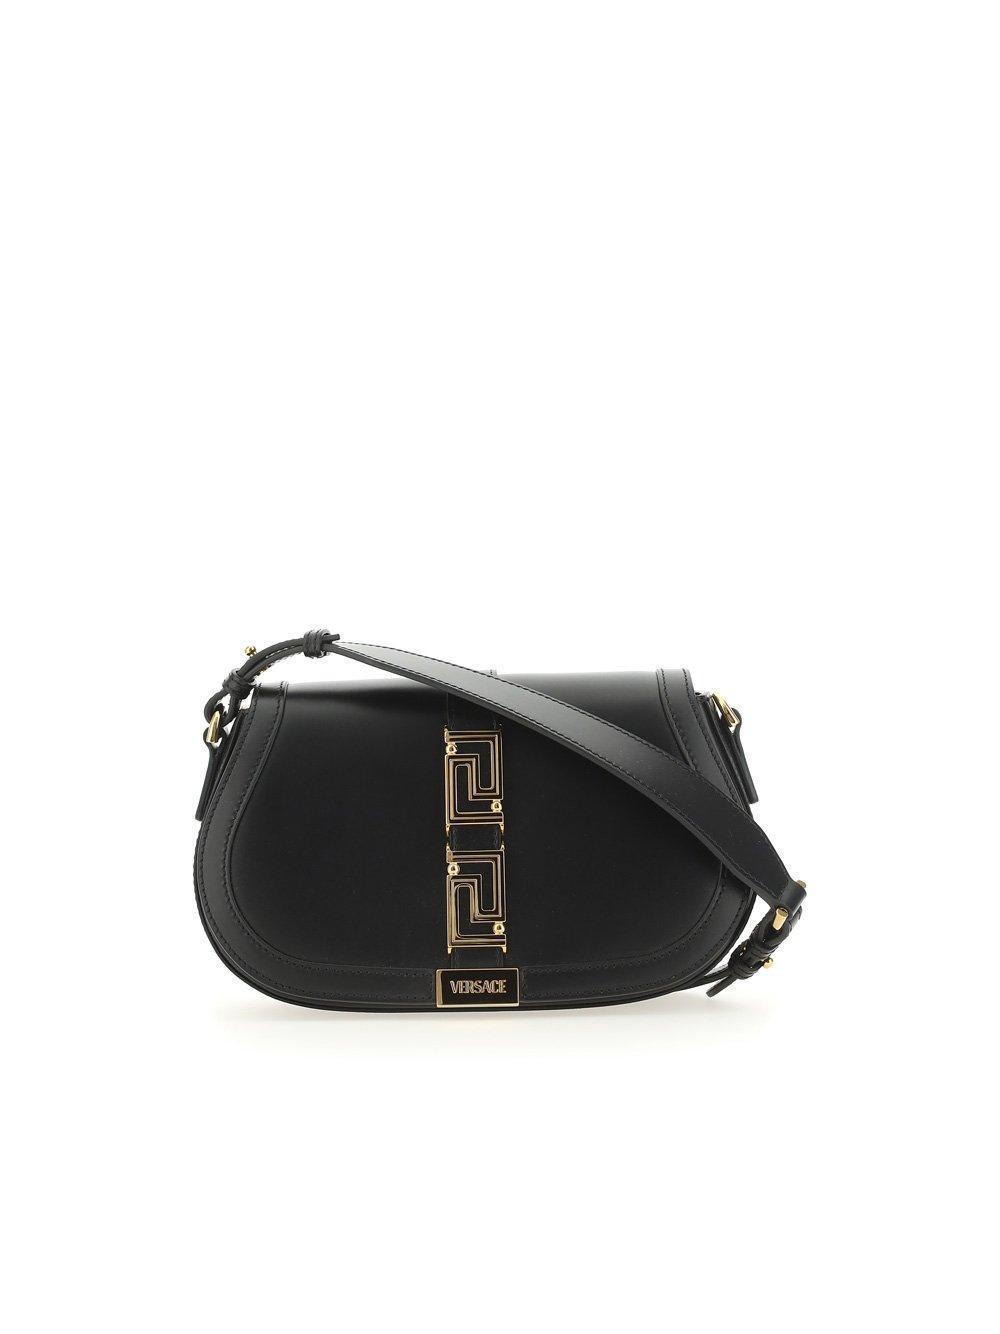 Versace Greca Goddess Foldover Top Shoulder Bag in Black